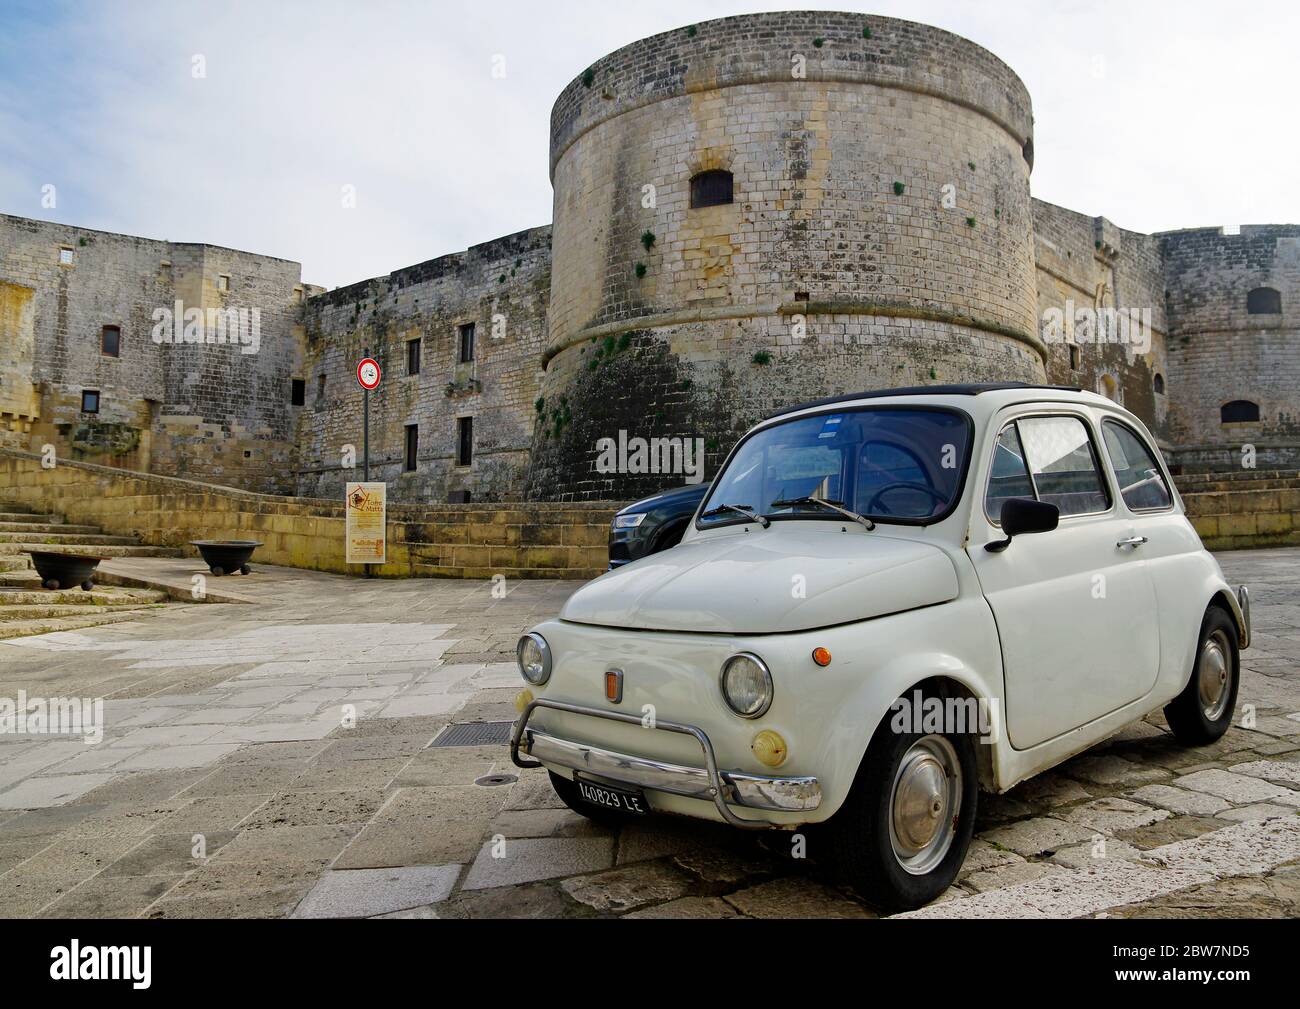 OTRANTO, APULIA ,ITALIE - 30 MARS 2018: Fiat Cinquecento classique devant le château médiéval Aragonese à Otranto, Apulia, Italie Banque D'Images